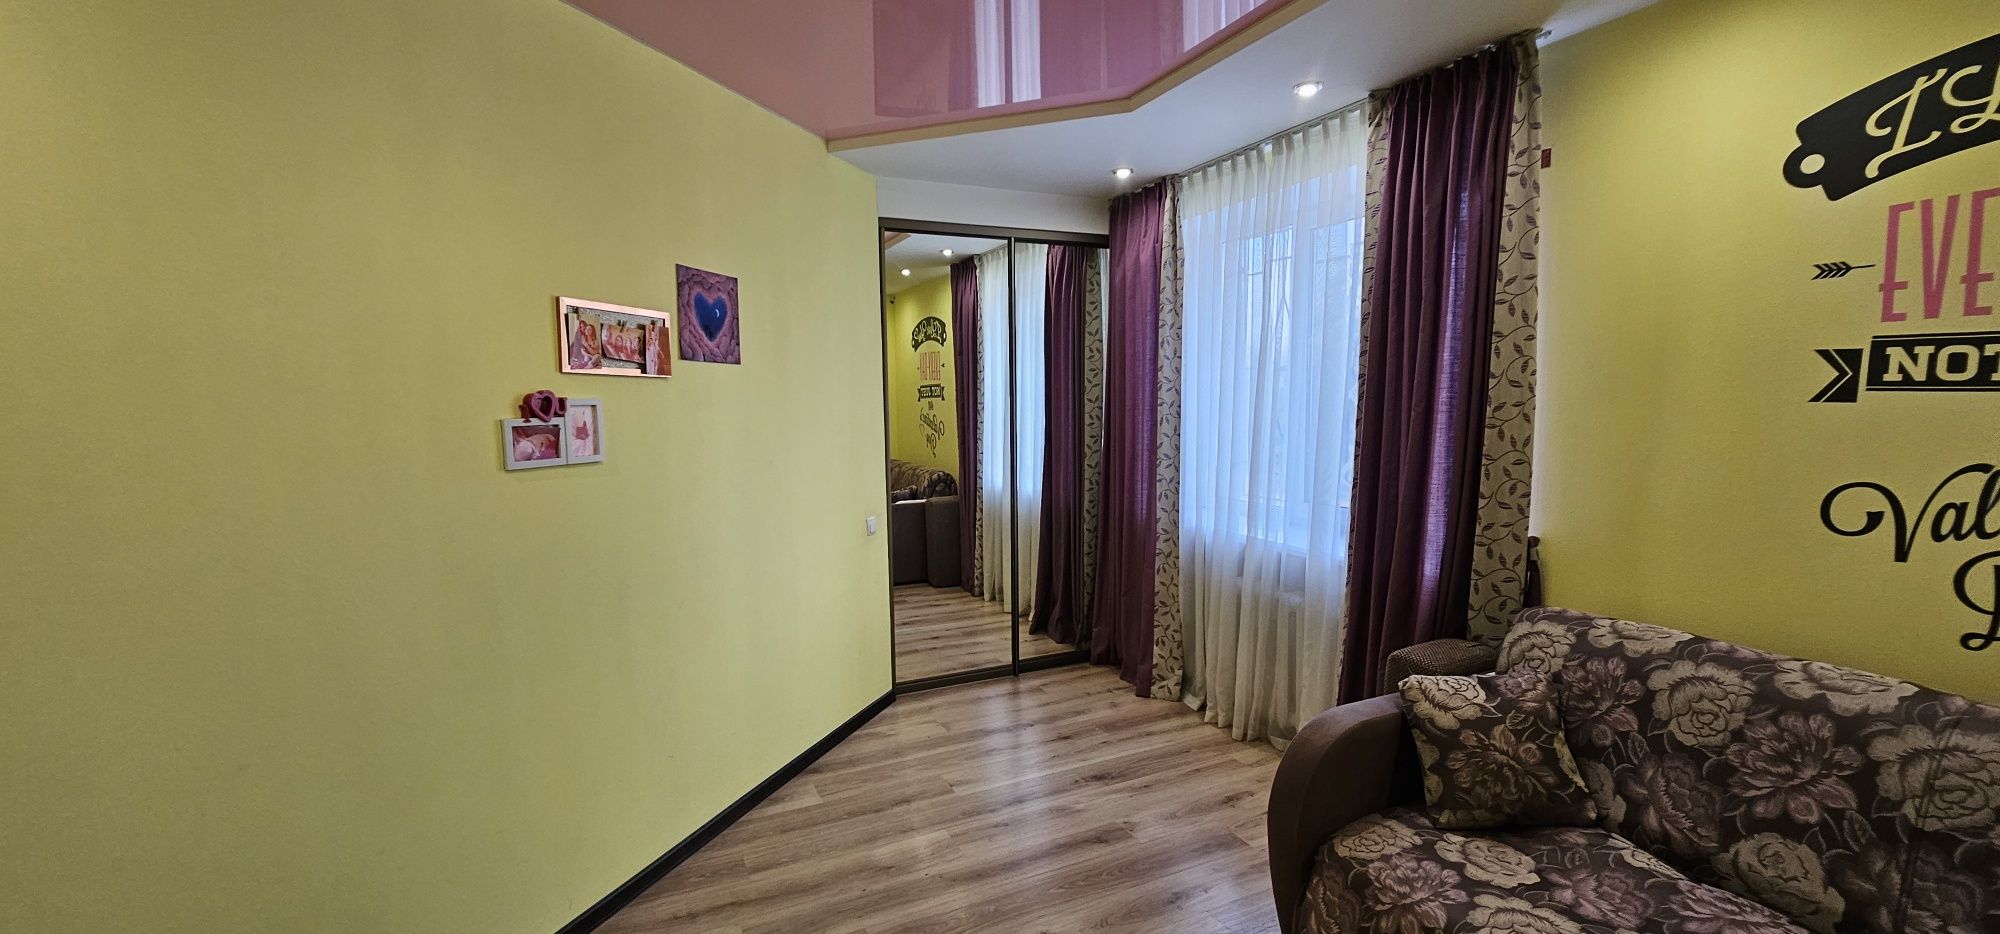 Продам 3-х комнатную квартиру в Черноморске